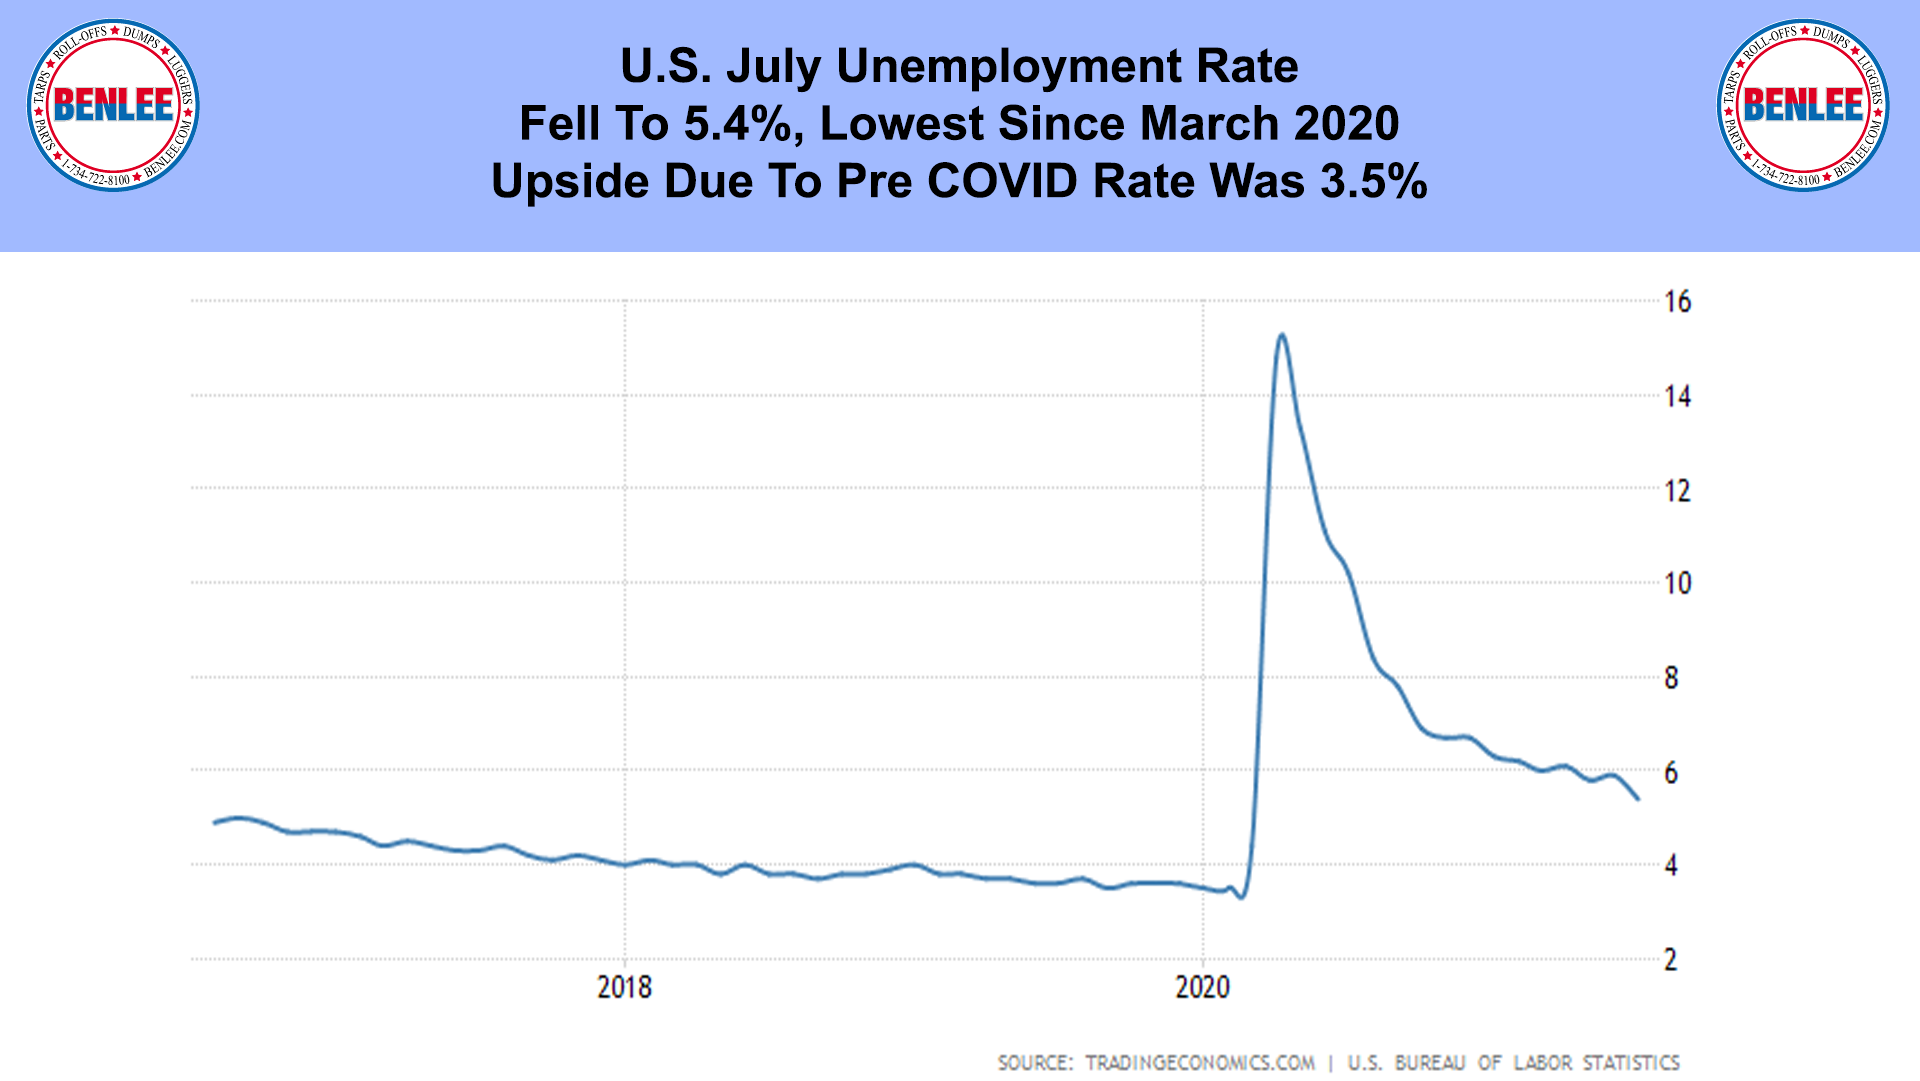 U.S. July Unemployment Rate